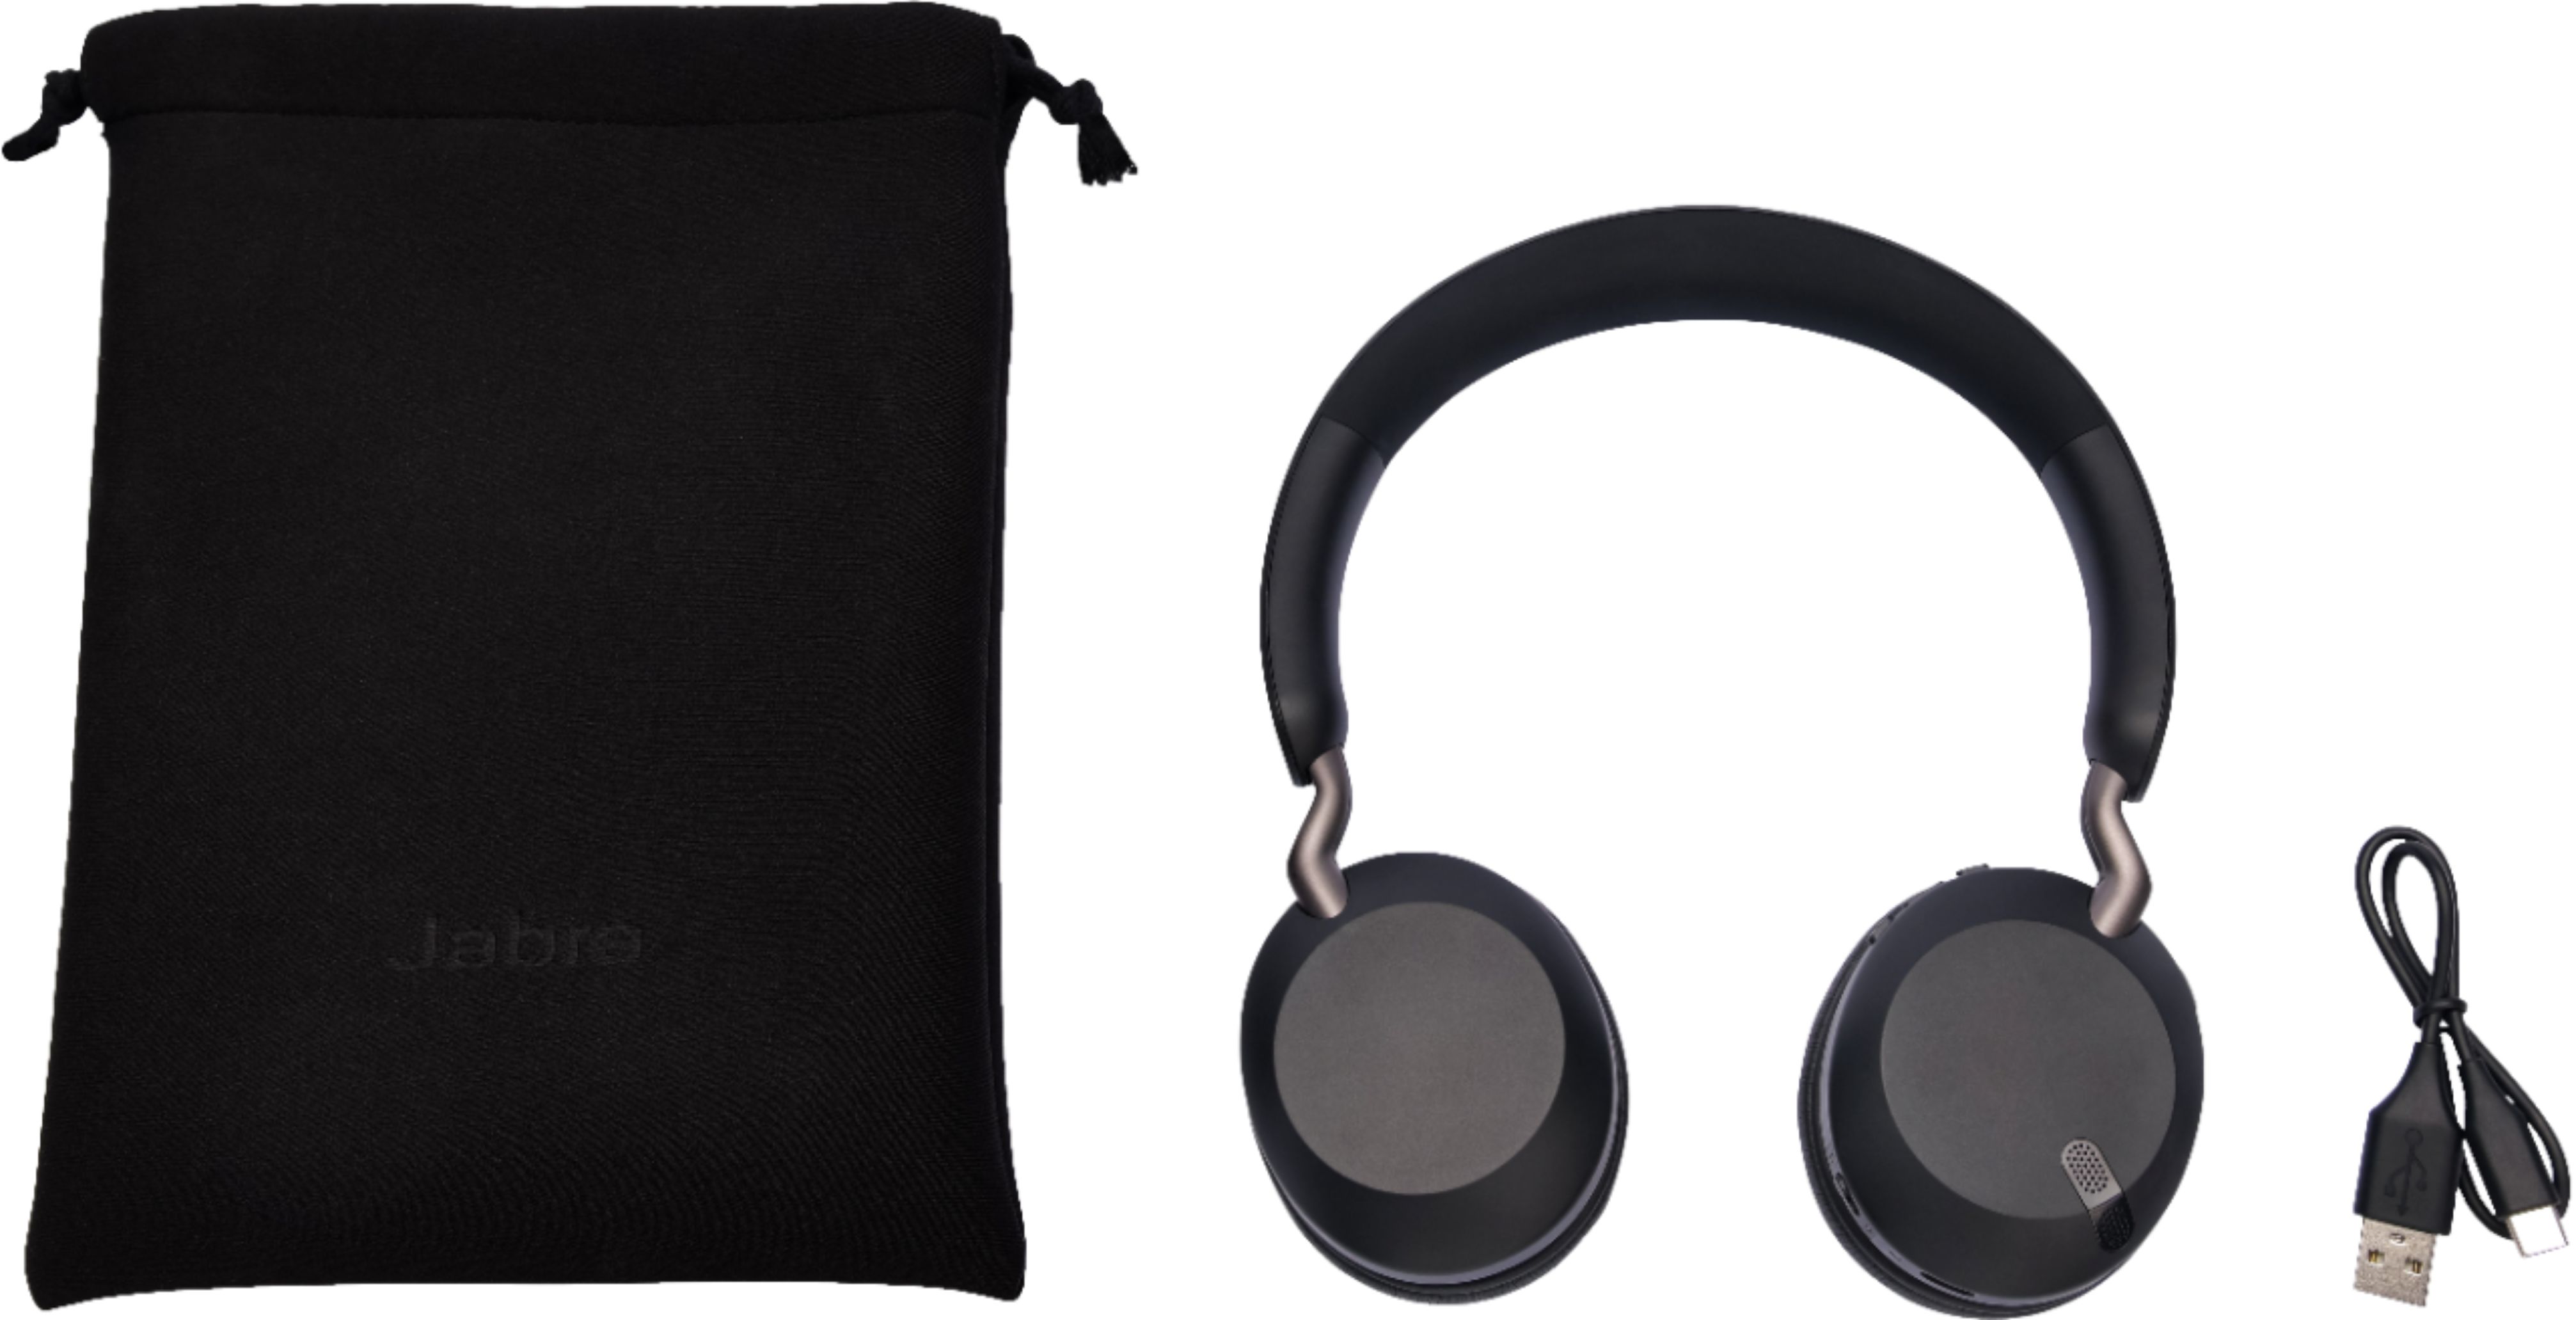 Jabra Elite 45h Wireless On-Ear Titanium Black 100-91800000-02 - Buy